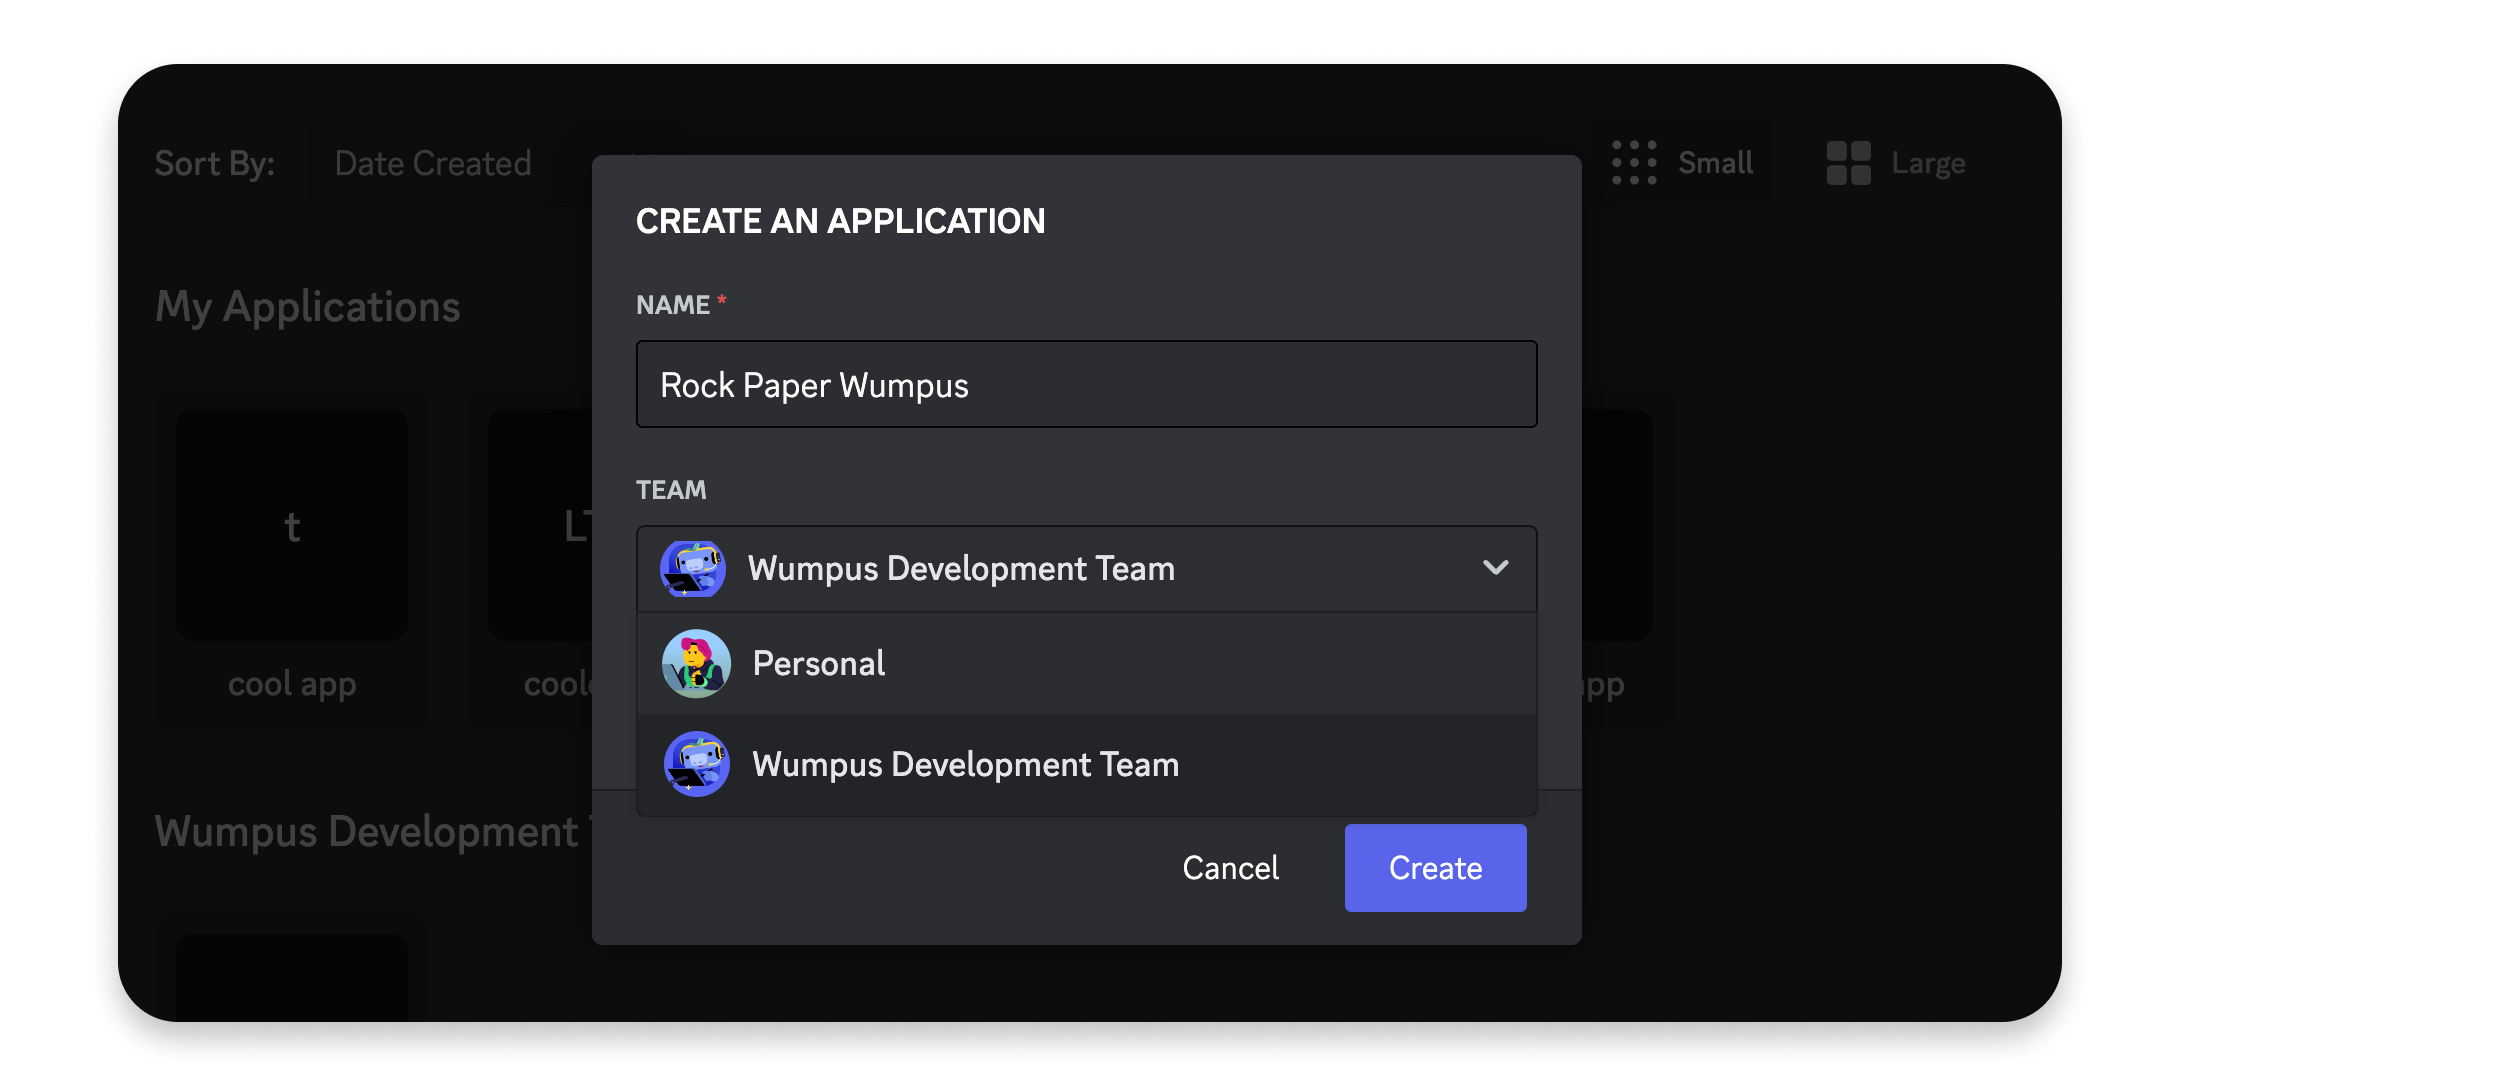 Discord developer portal does not require 2FA for adding team